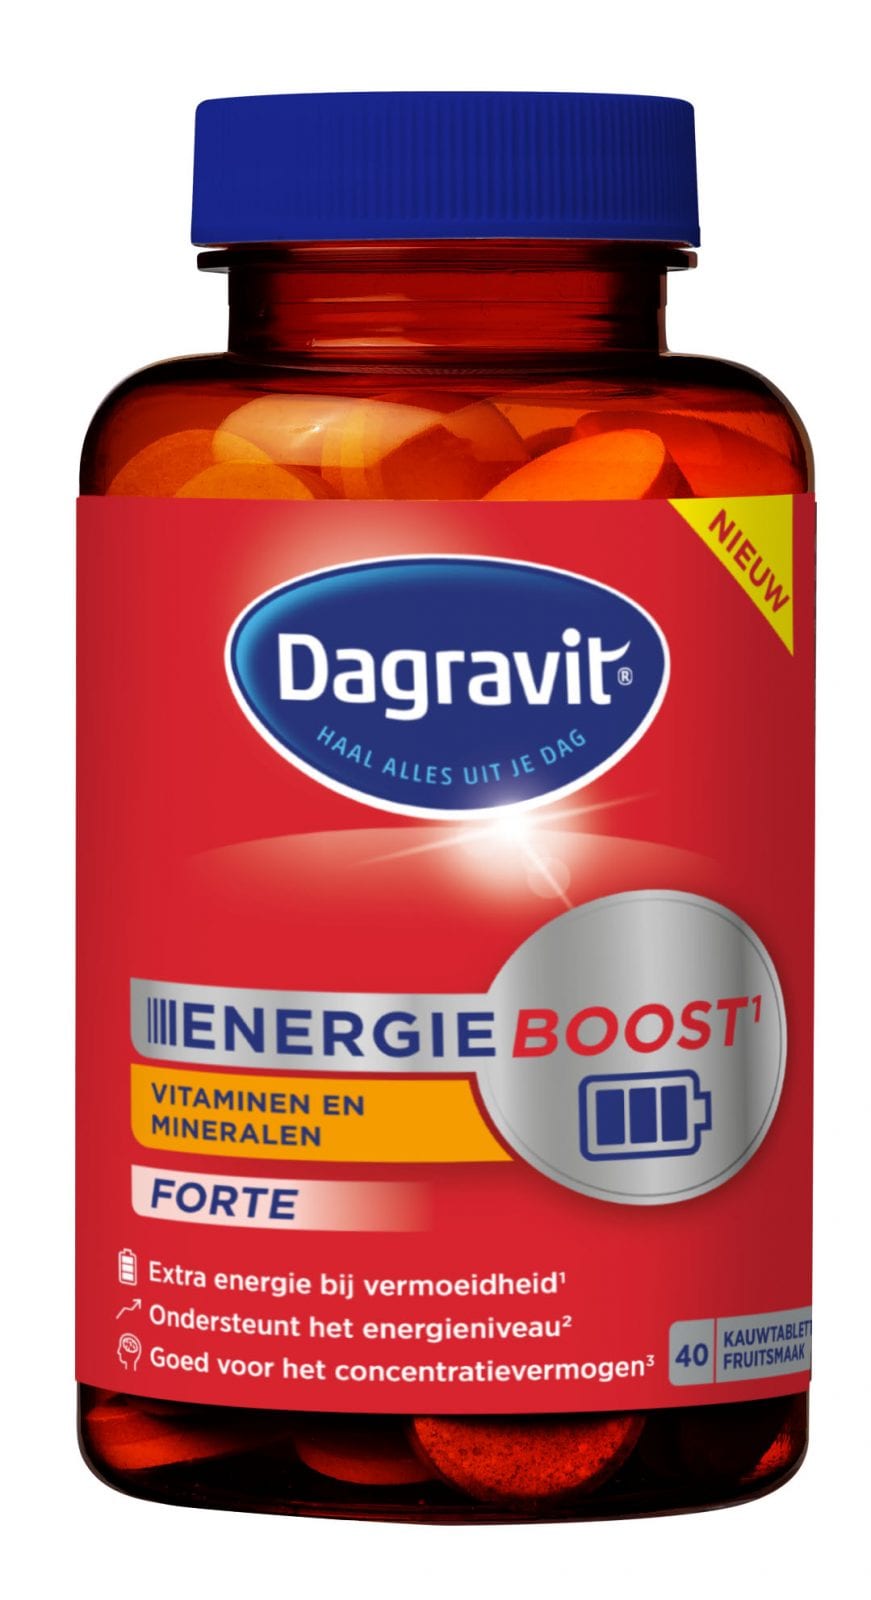 Sloppenwijk Mail mout Energie Boost Forte kauwtablet - Dagravit